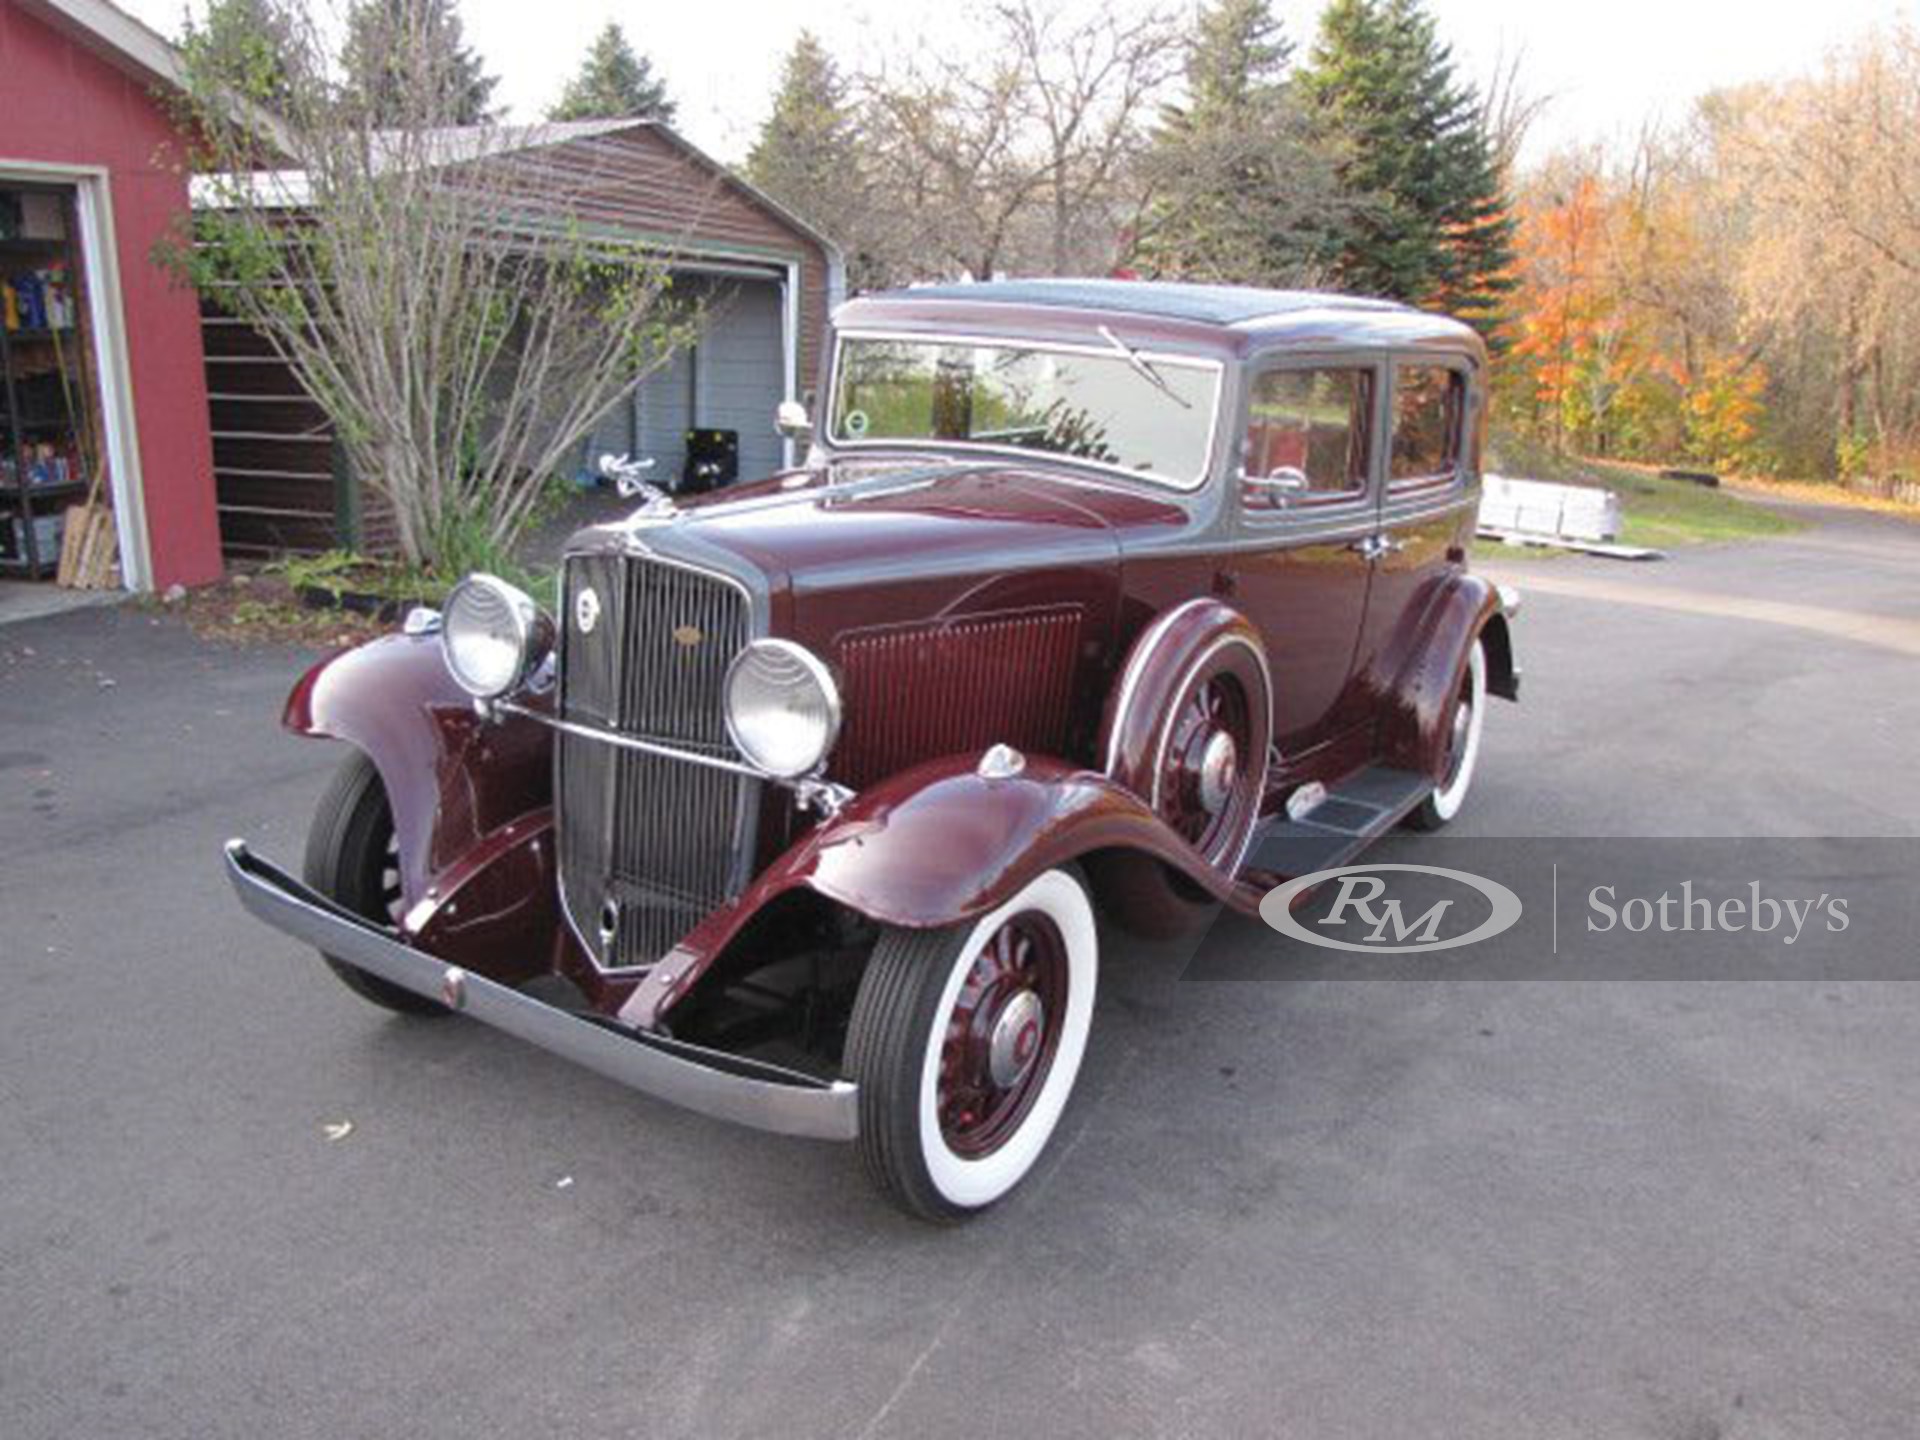 1933 Nash "Big Six" Series 1120 